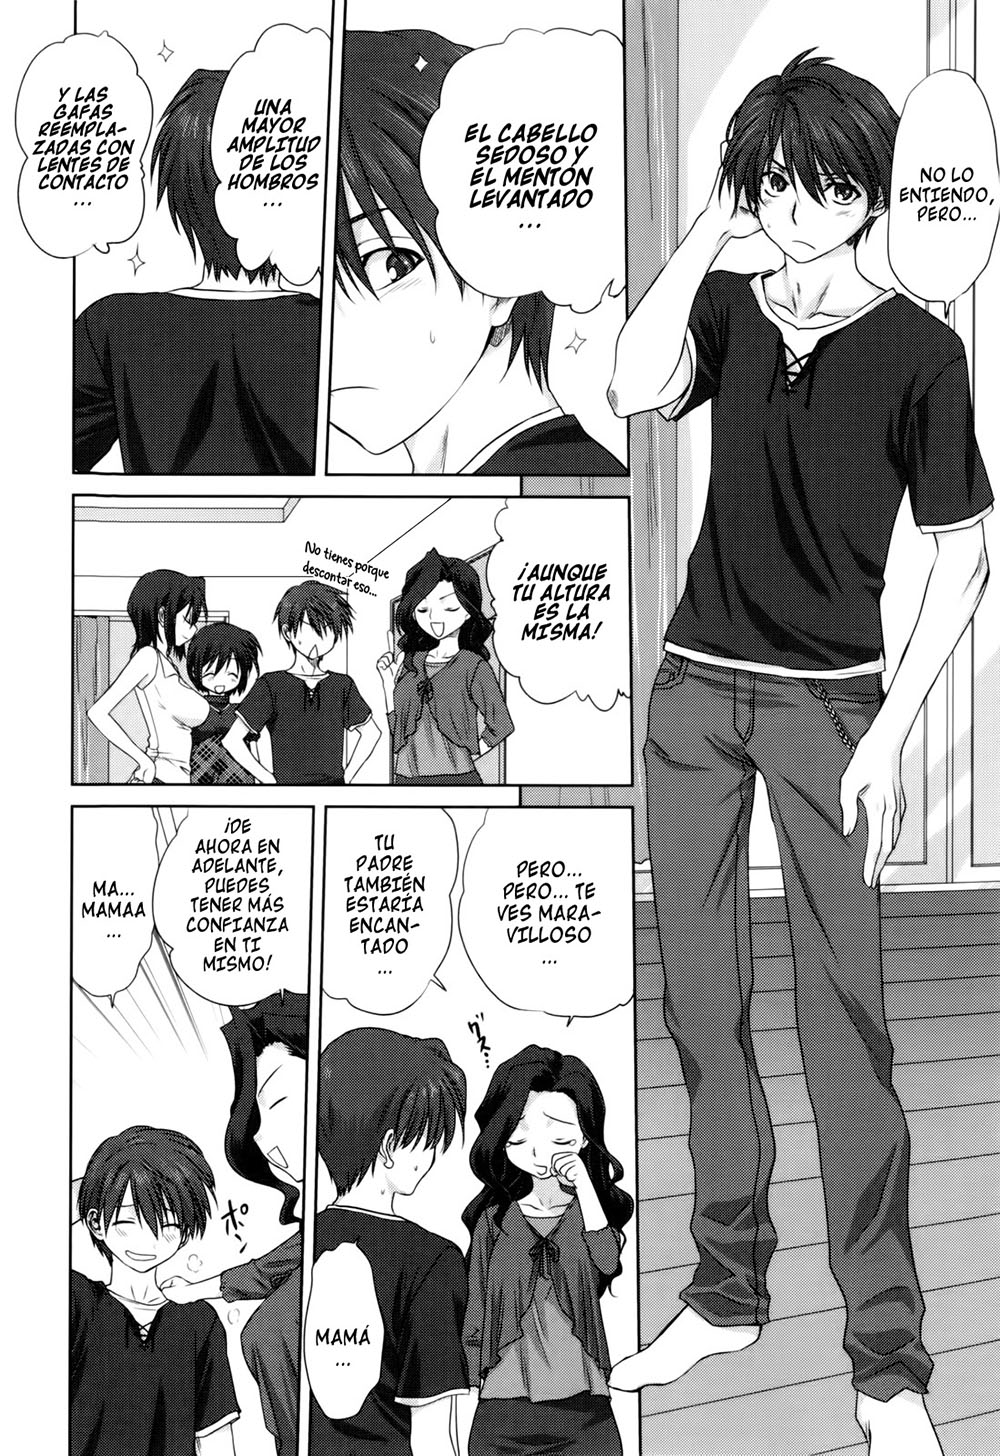 La Familia al Completo #2 - 7 - Comics Porno - Hentai Manga - Cartoon XXX